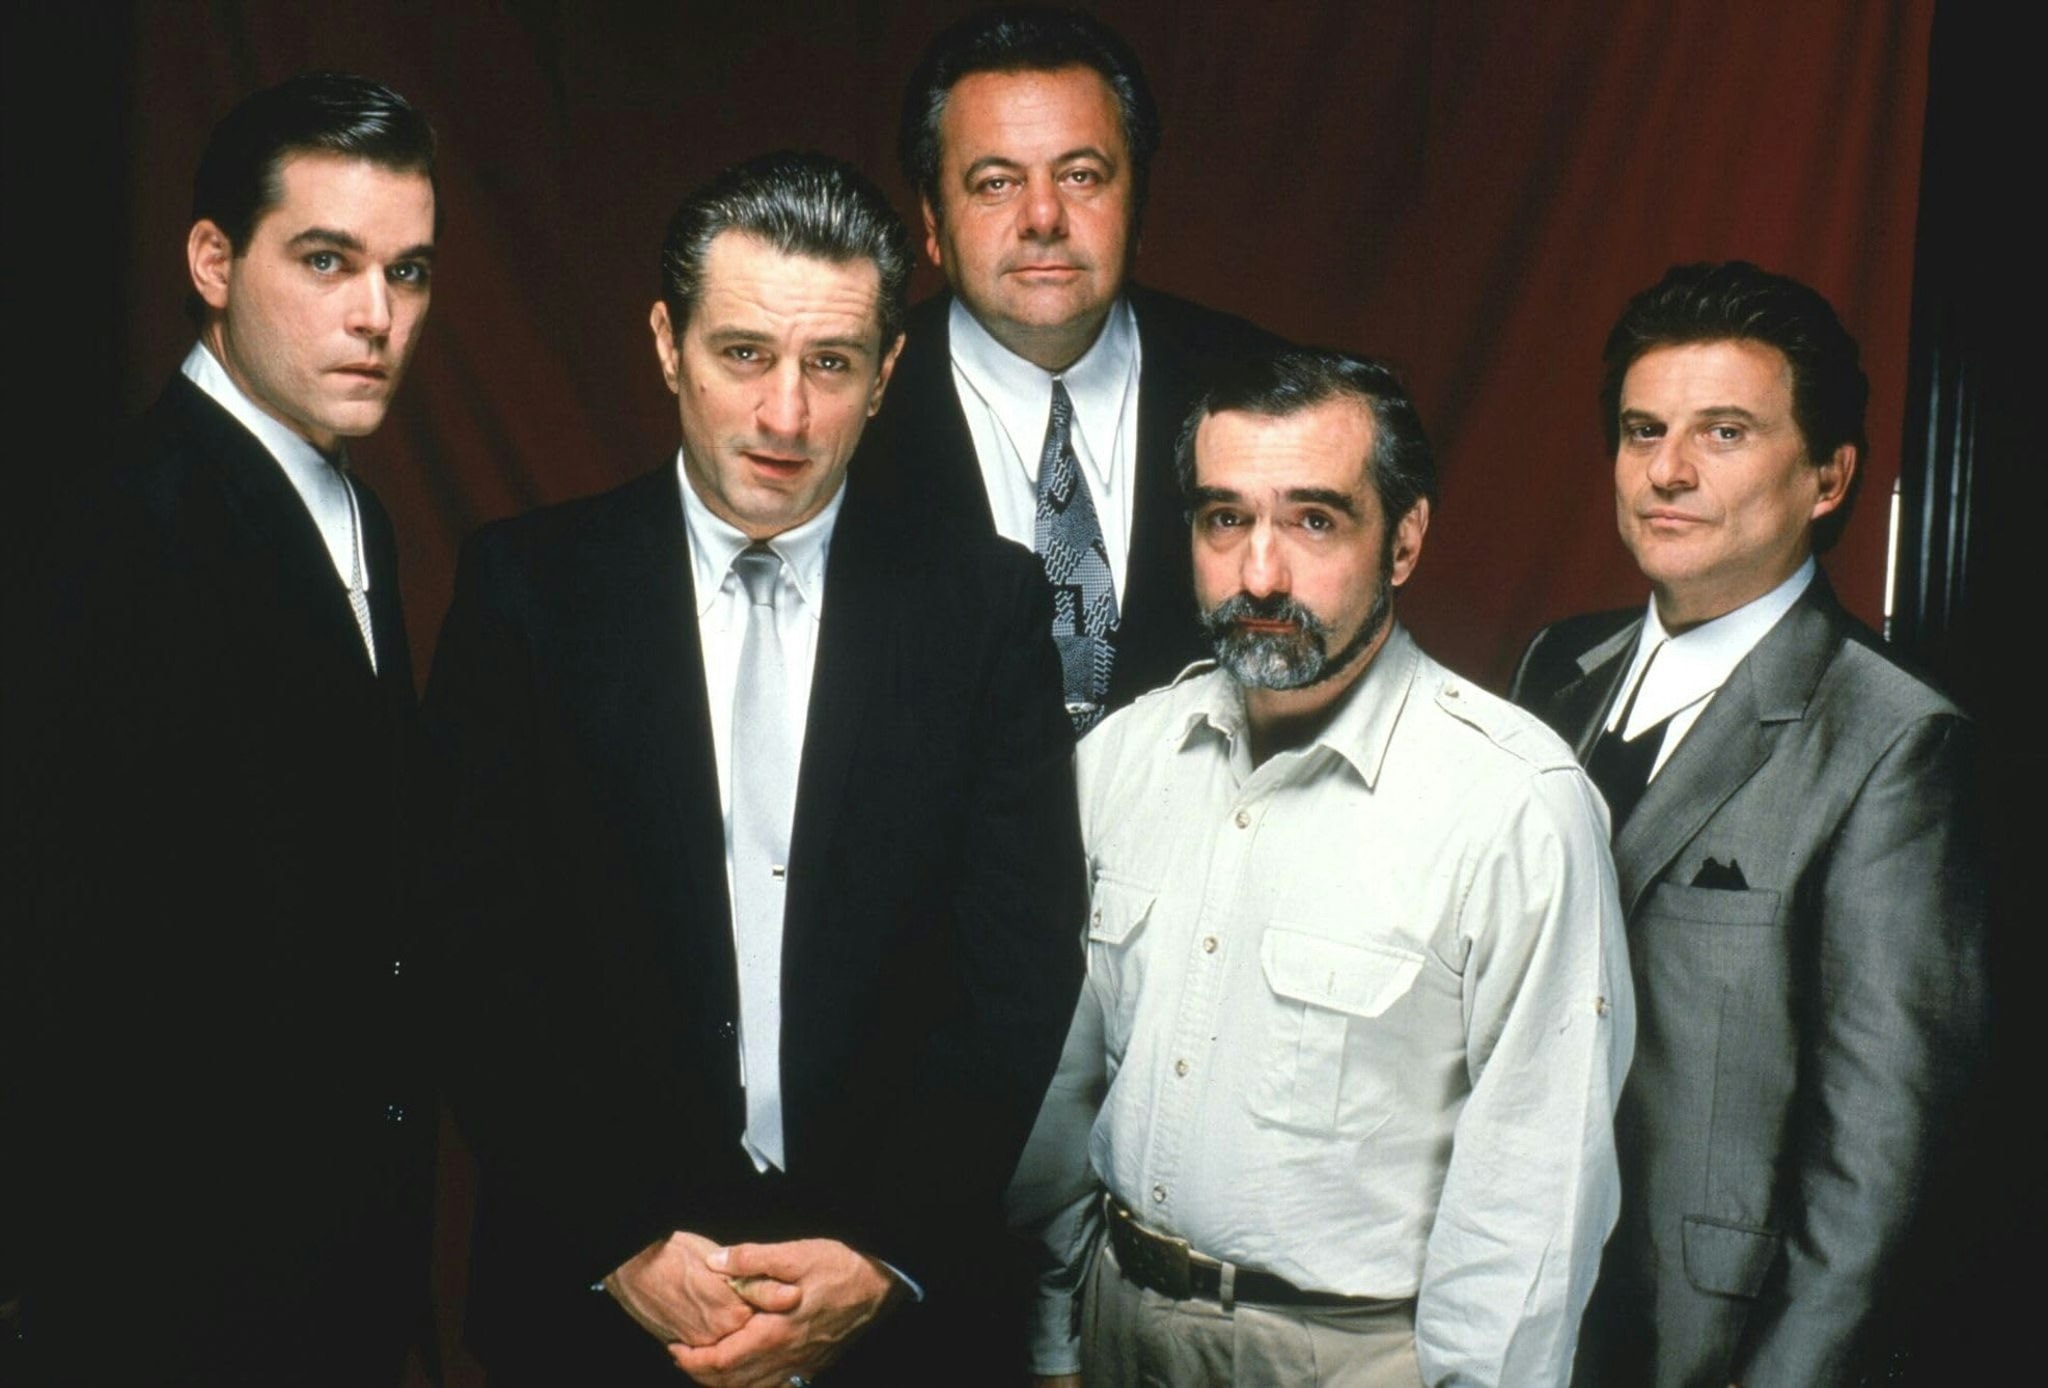 Robert De Niro, Martin Scorsese, Ray Liotta, Joe Pesci, Paul Sorvino. Goodfellas. Copyright 1990. Warner Bros. Entertainment